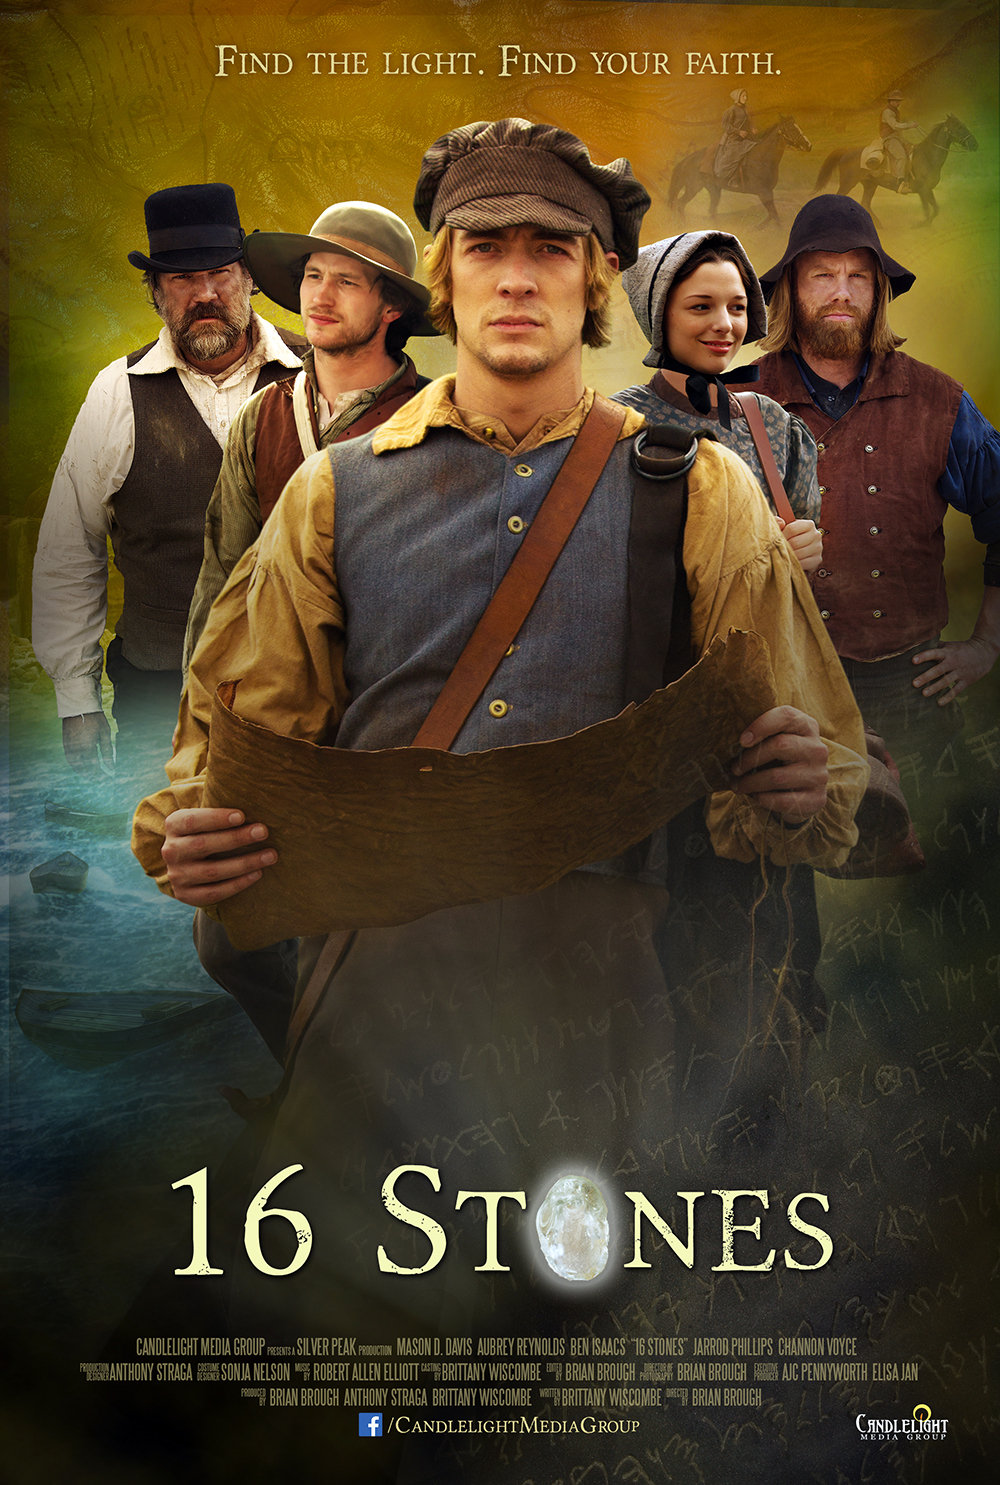 16 Stones (2014) Screenshot 1 